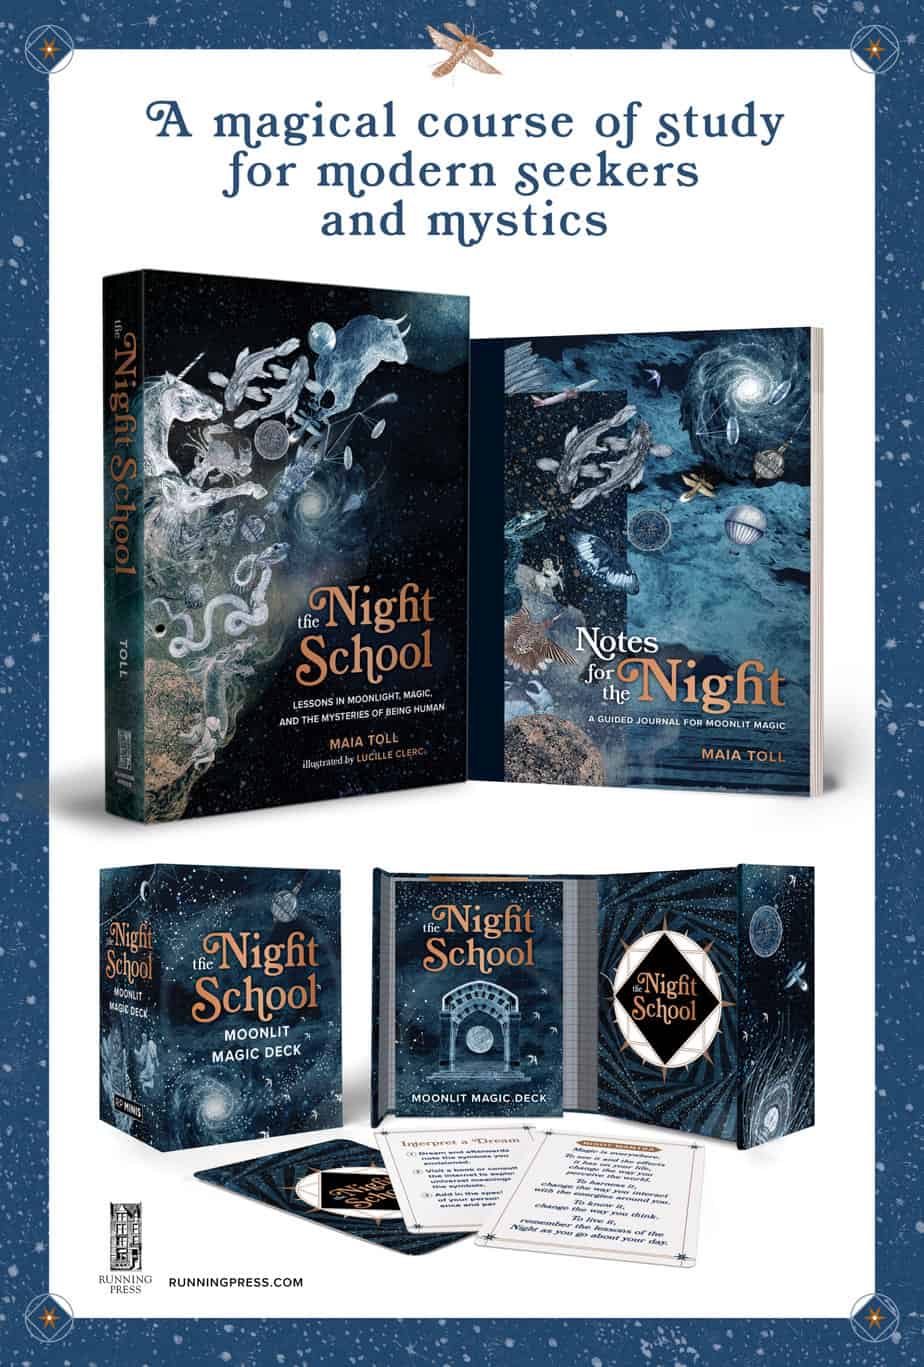 The Night School book, journal, and mini-deck bundle